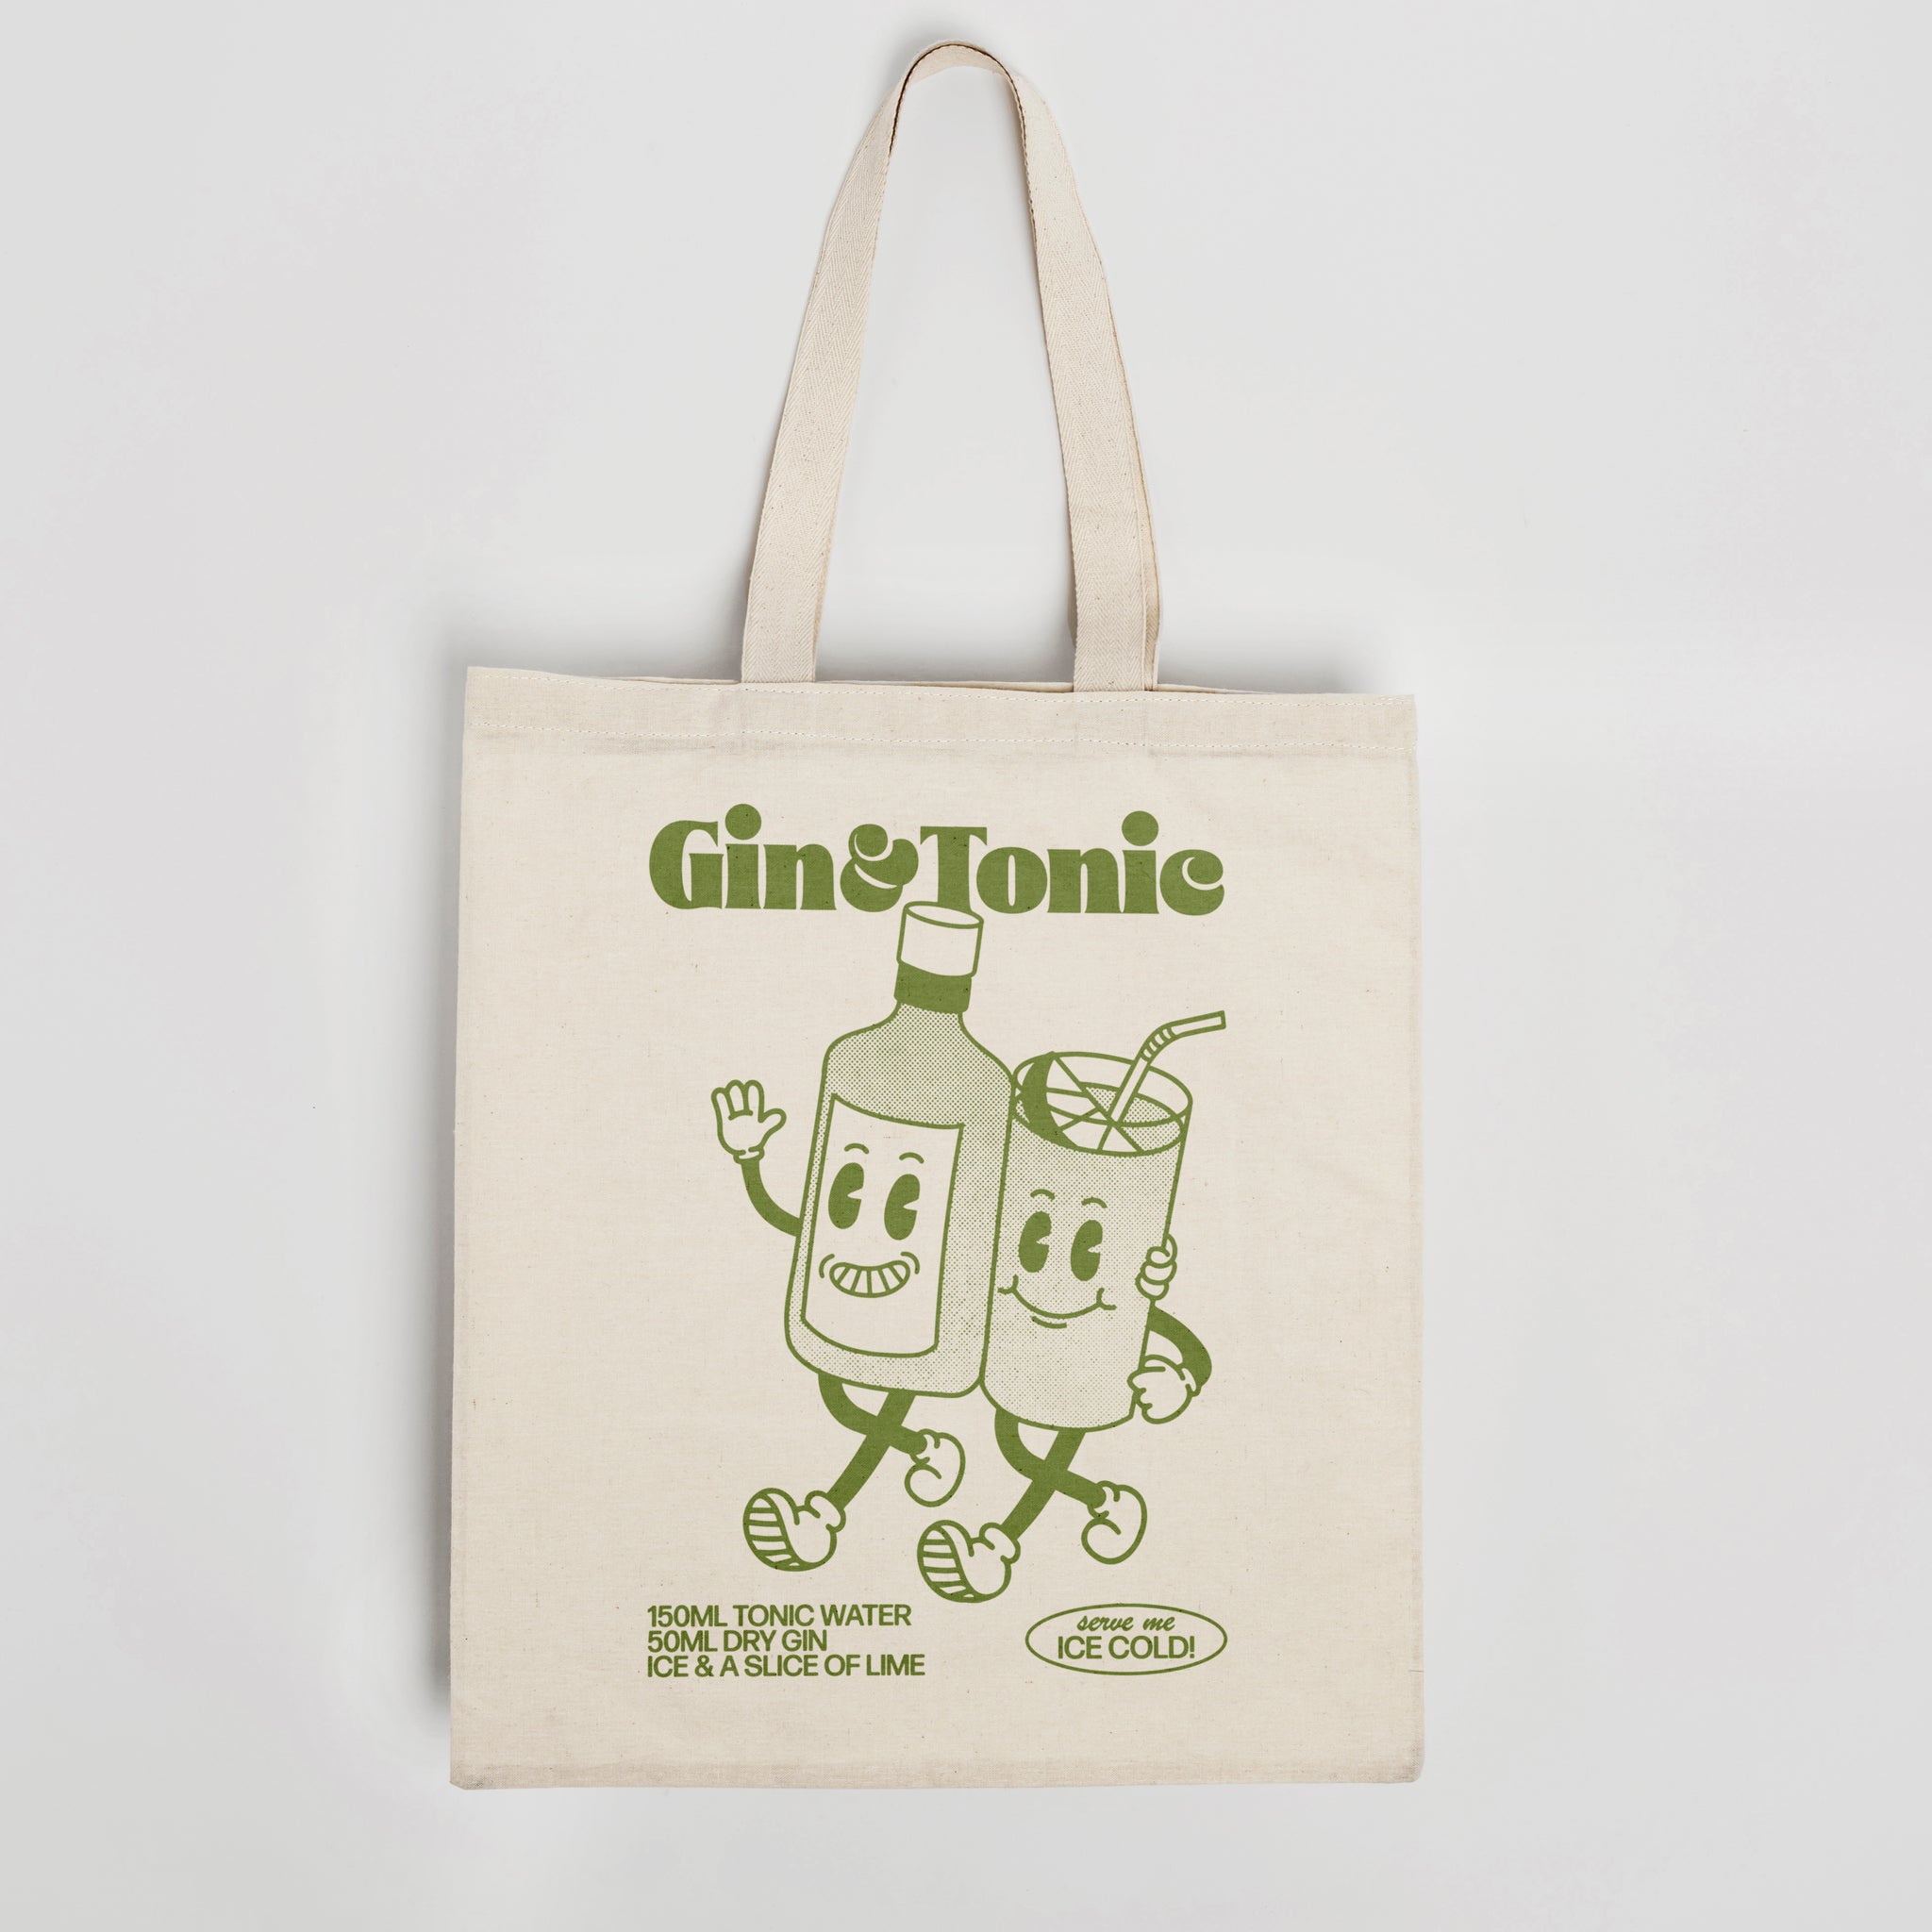 'Gin & Tonic' organic cotton canvas tote bag